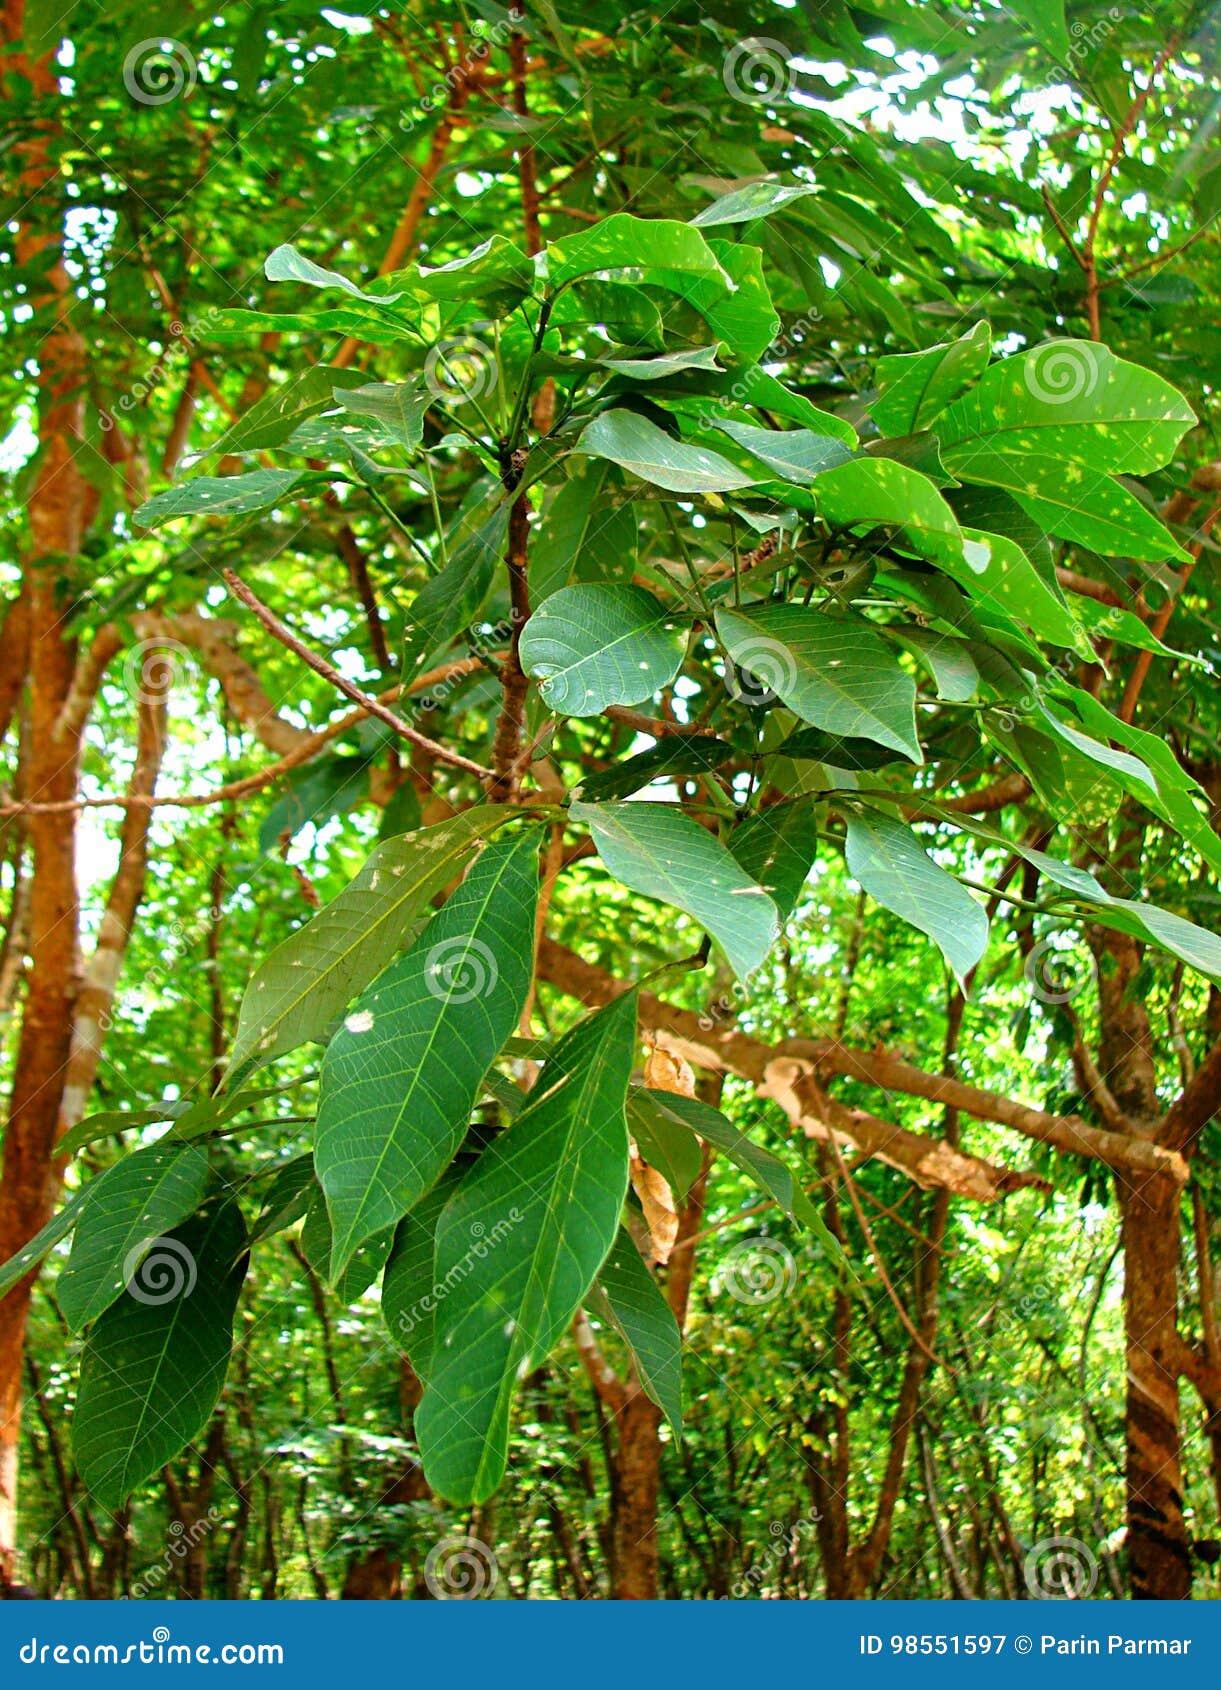 leaves of rubber tree - hevea brasiliensis